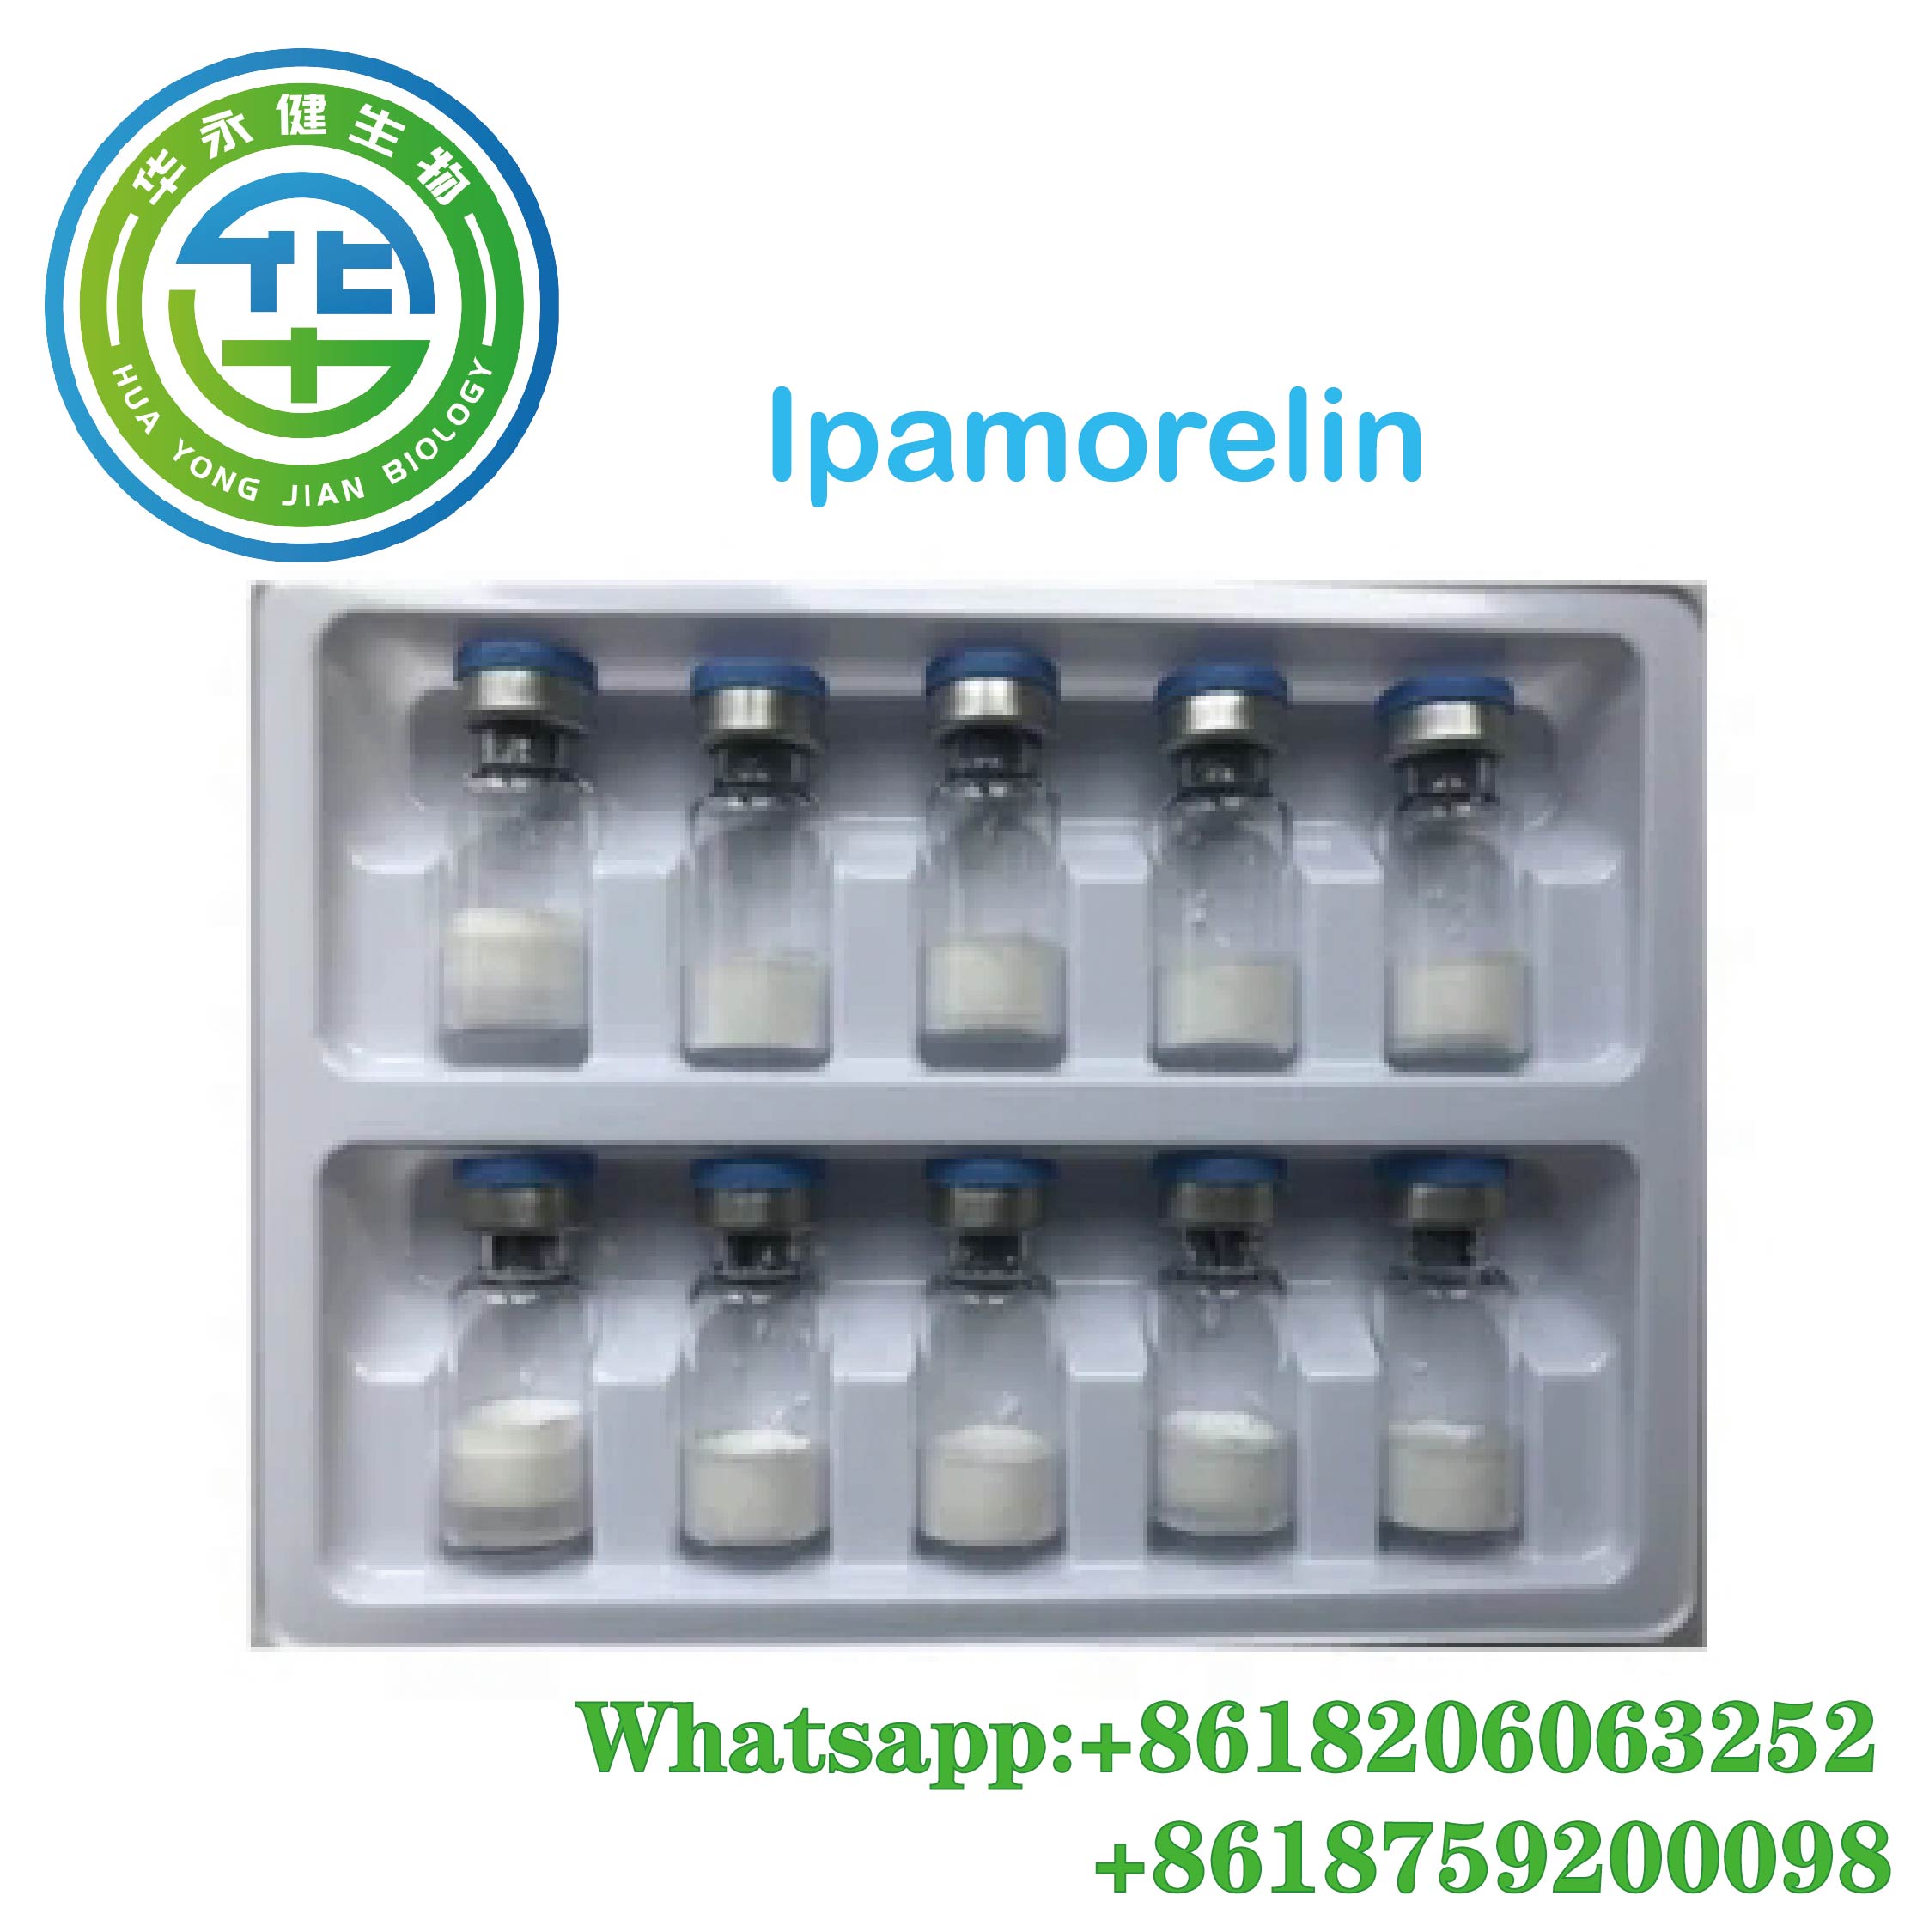 White Powder CAS 170851-70-4 Human Growth Hormone Peptides Ipamorelin Acetate 